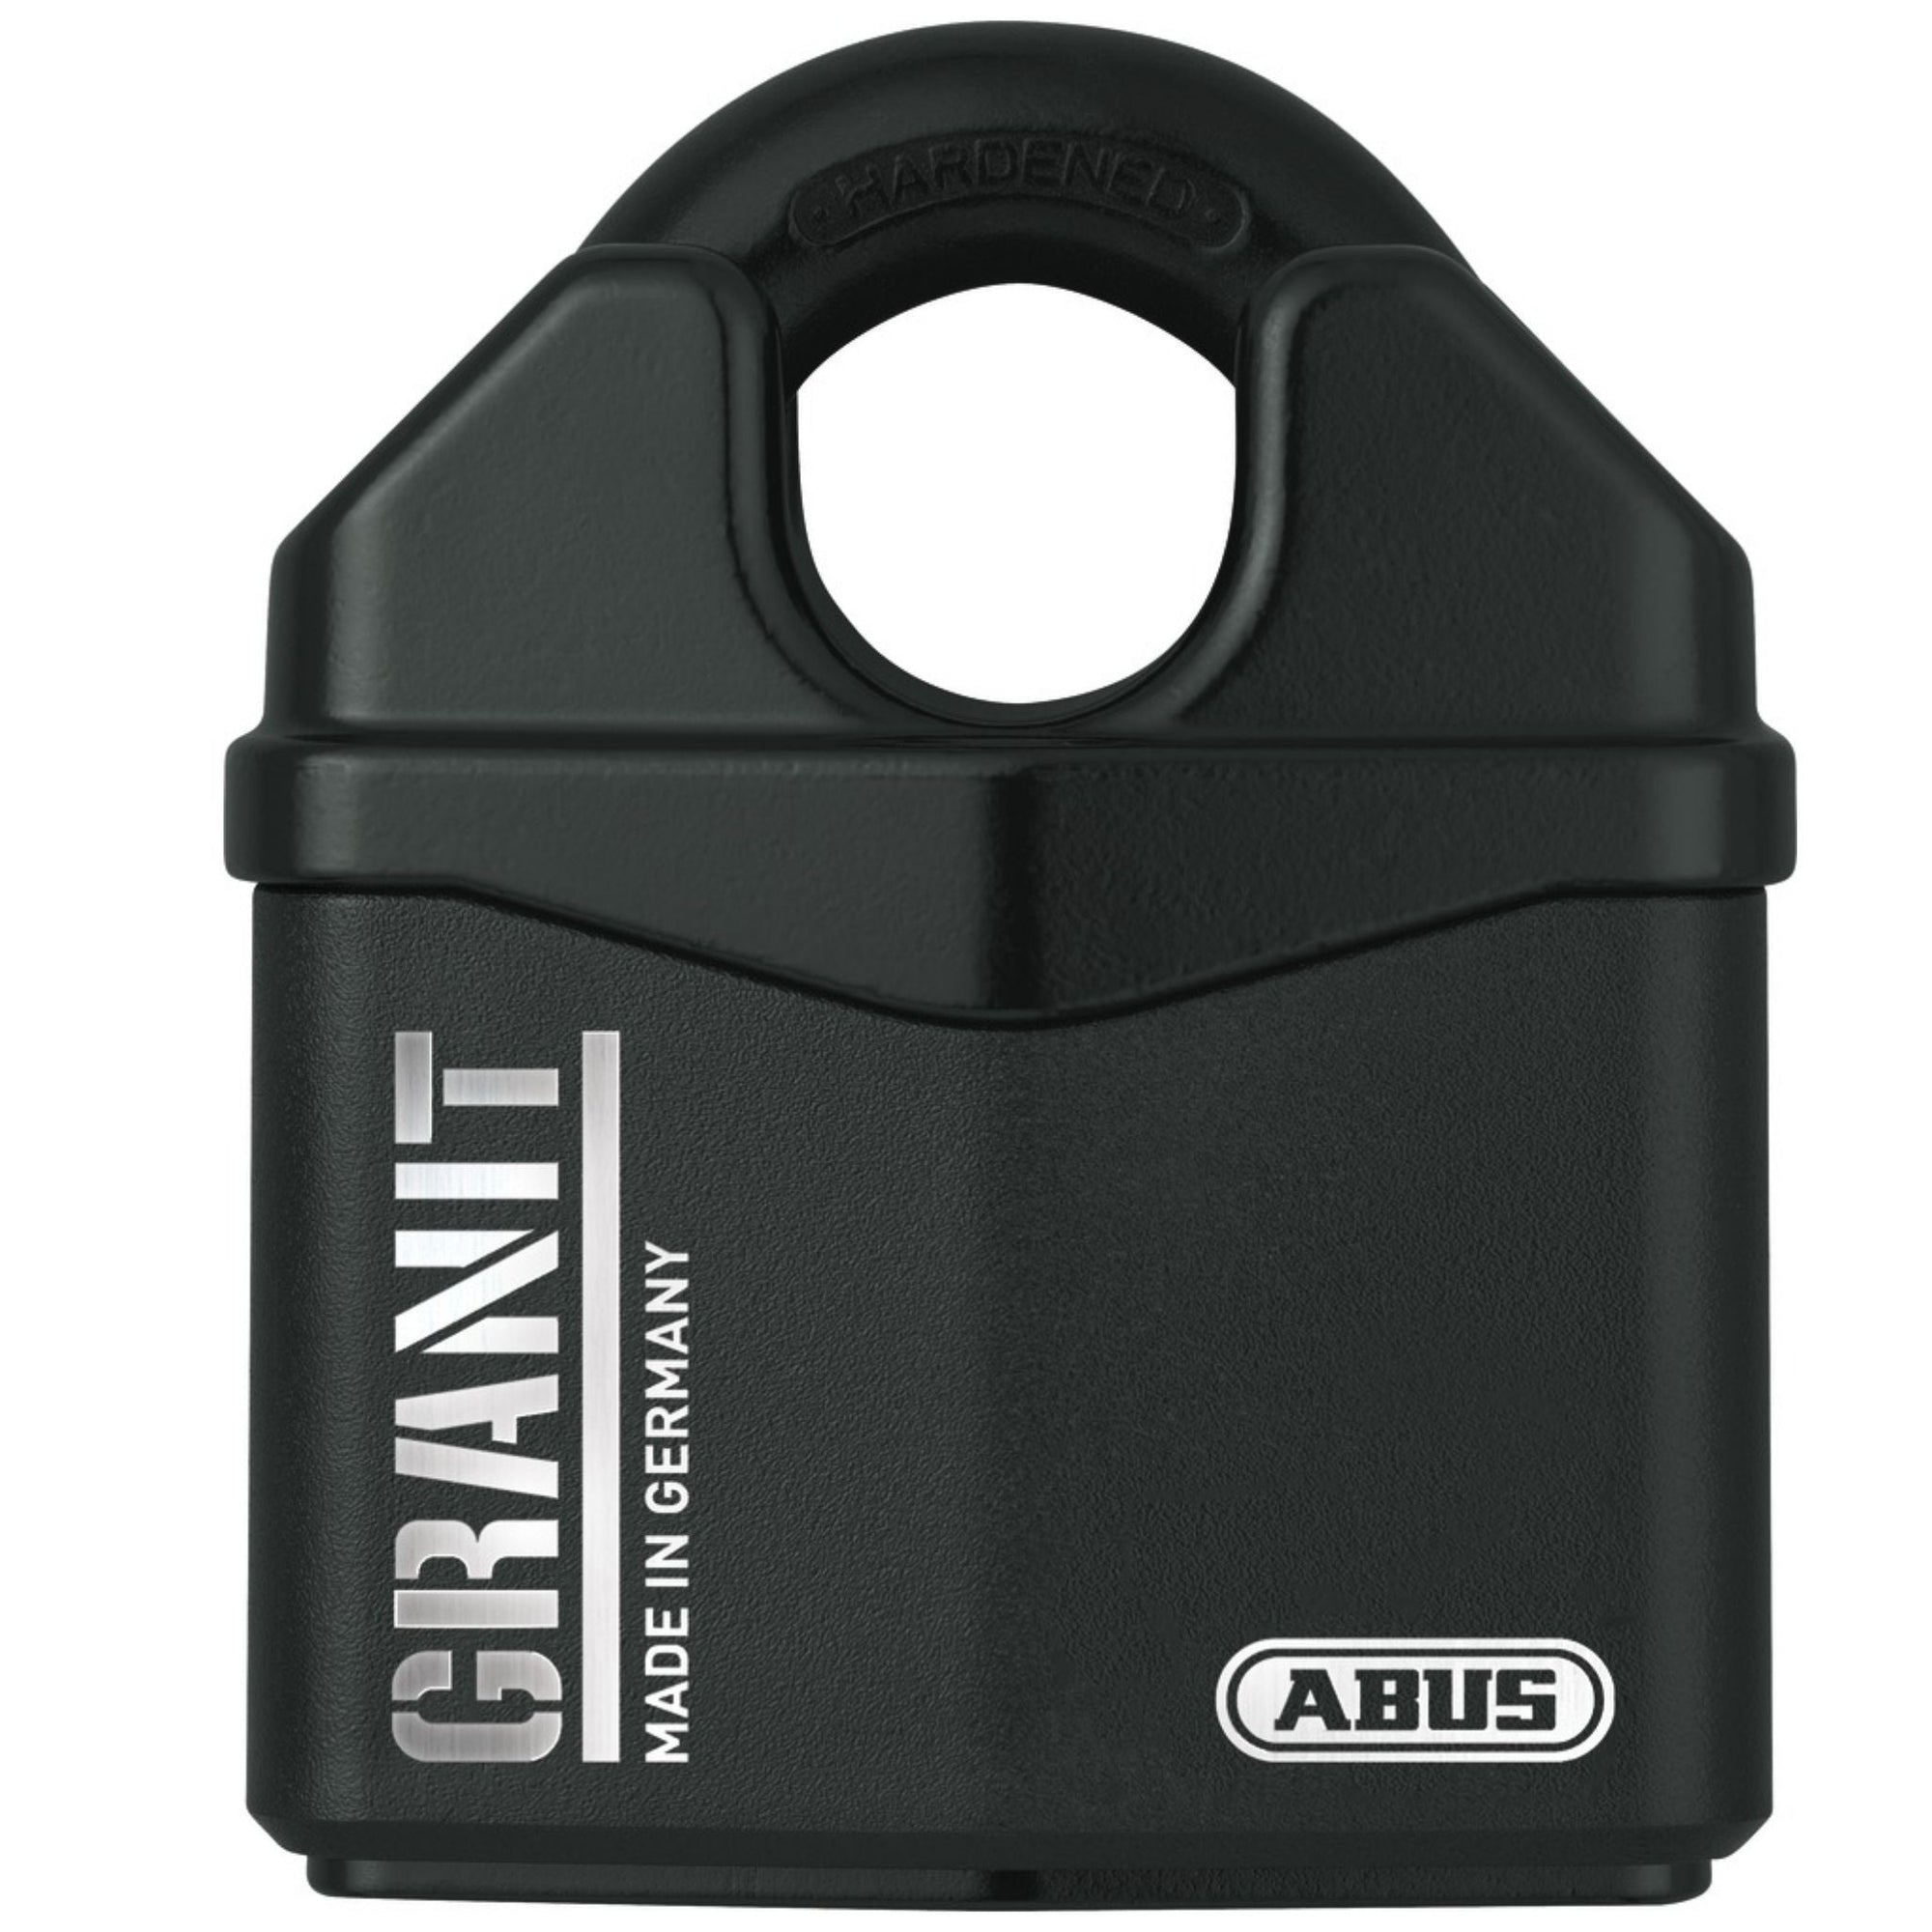 Abus 37/80 KA 5544653 Granit Lock Keyed Alike Black Granite Padlocks Cut Keys to Match KA5544653 - The Lock Source